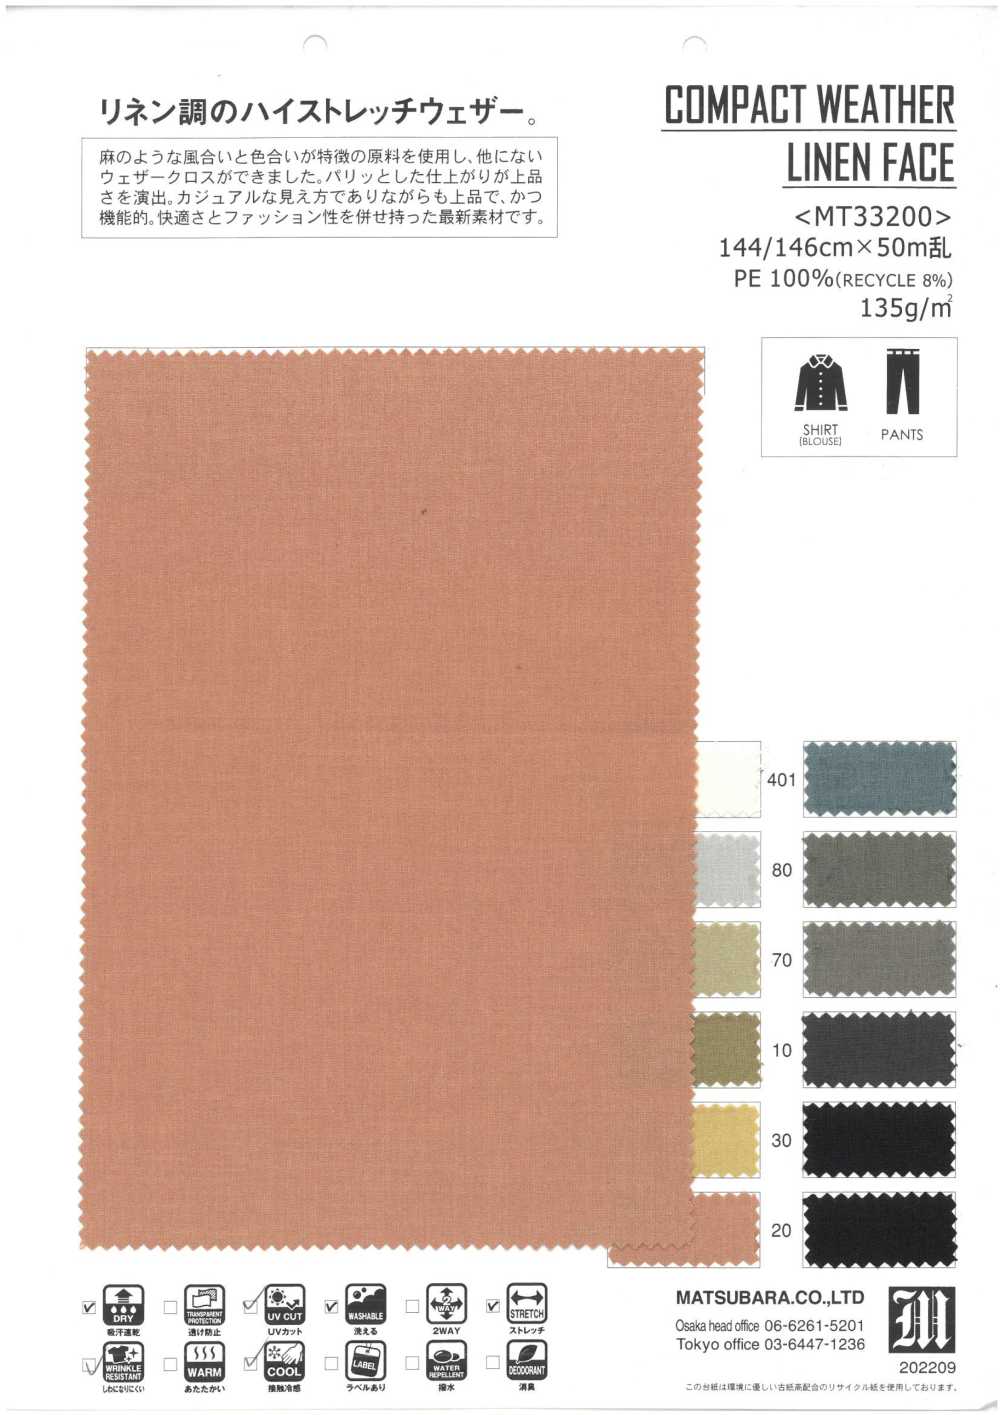 MT33200 VISAGE COMPACT EN LIN INTEMPÉRIES[Fabrication De Textile] Matsubara